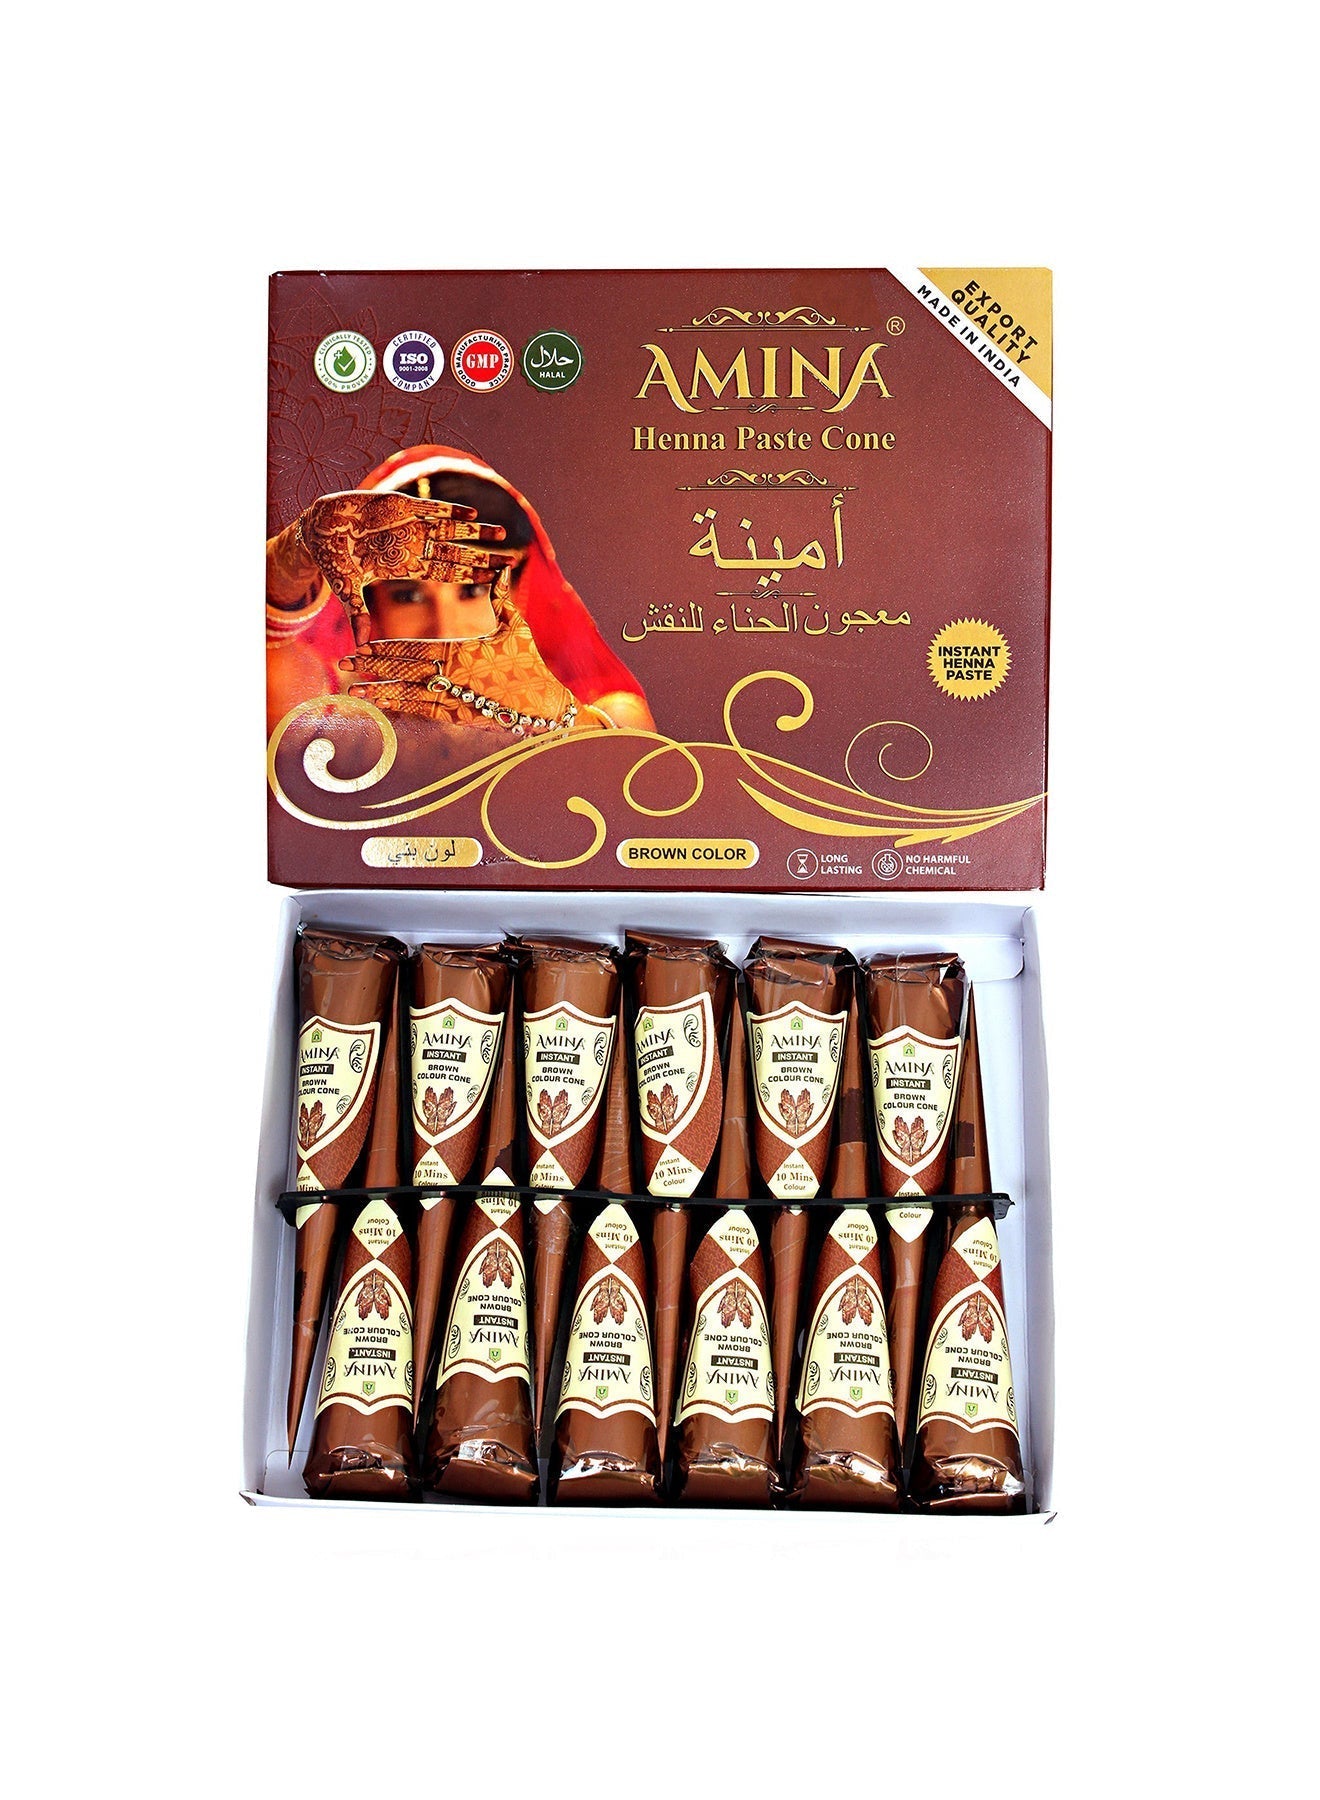 Organic Henna Cones Amina Instant Mehendi Cone Brown 25 gm Value Pack of 12 